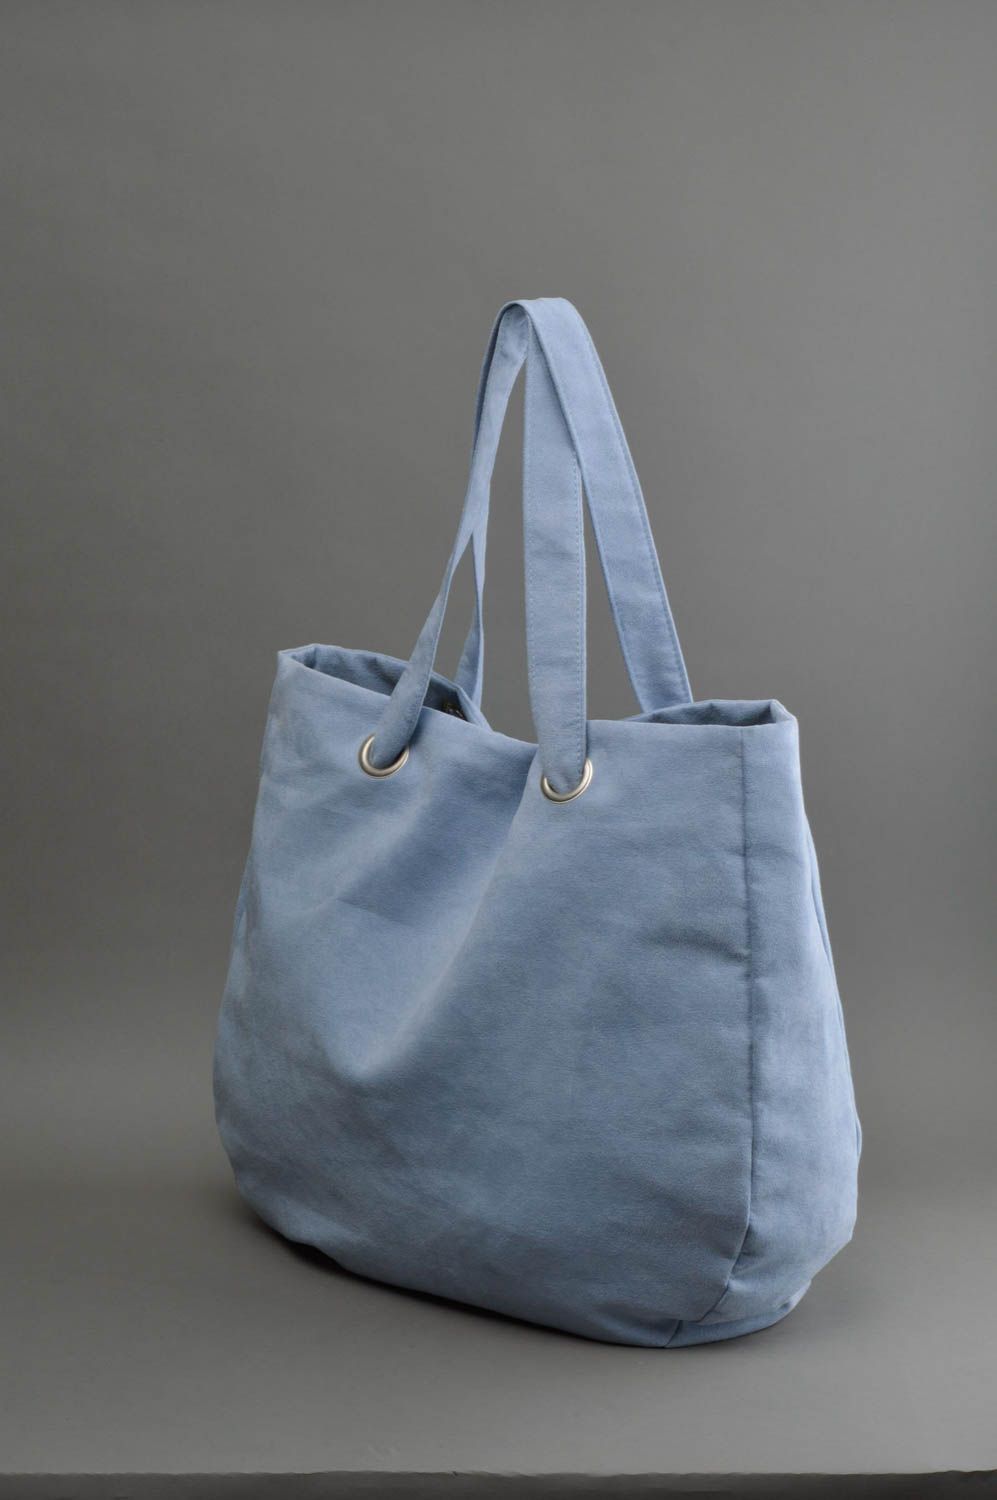 Handmade suede handbag designer purse accessories for women gift idea for girl photo 2